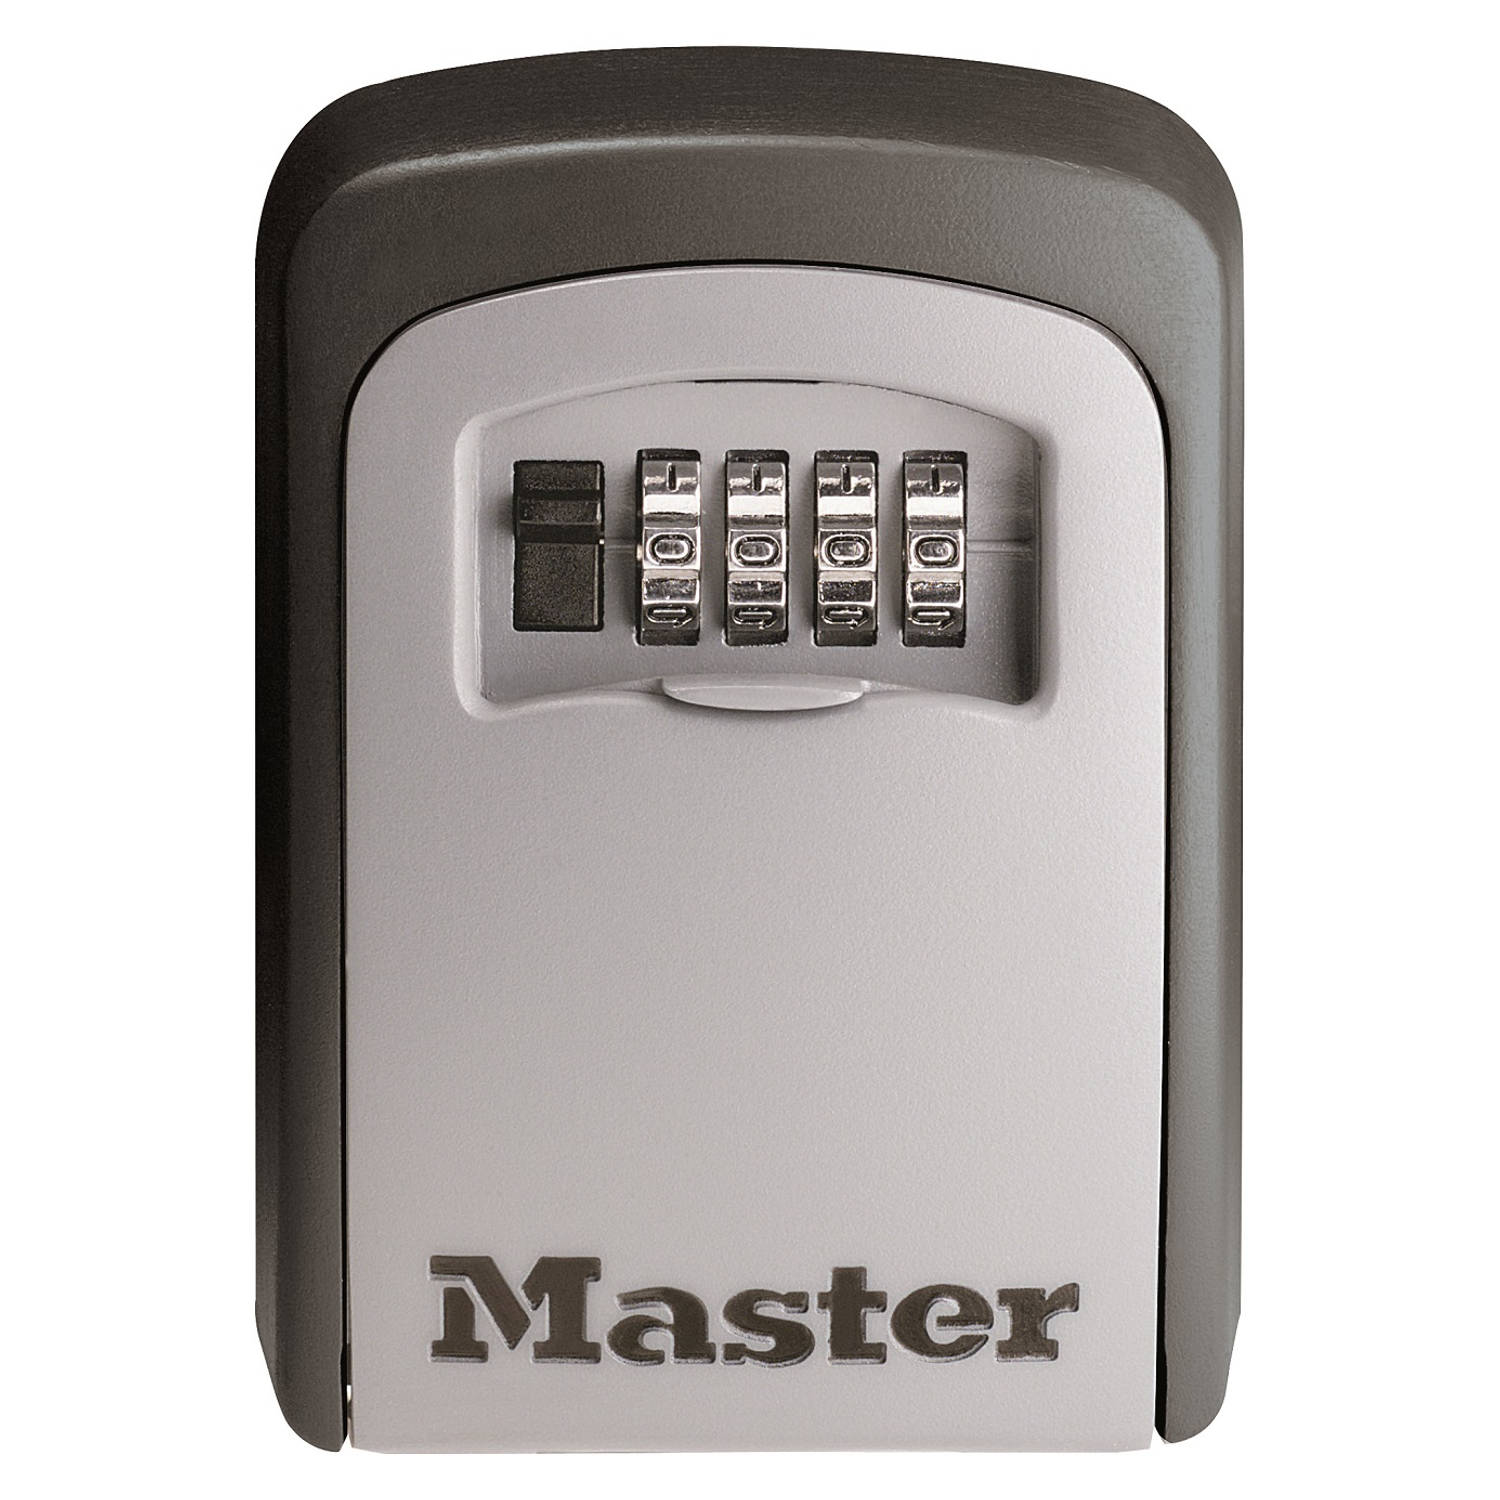 Masterlock Sleutelkast 5401eurd - Zwart